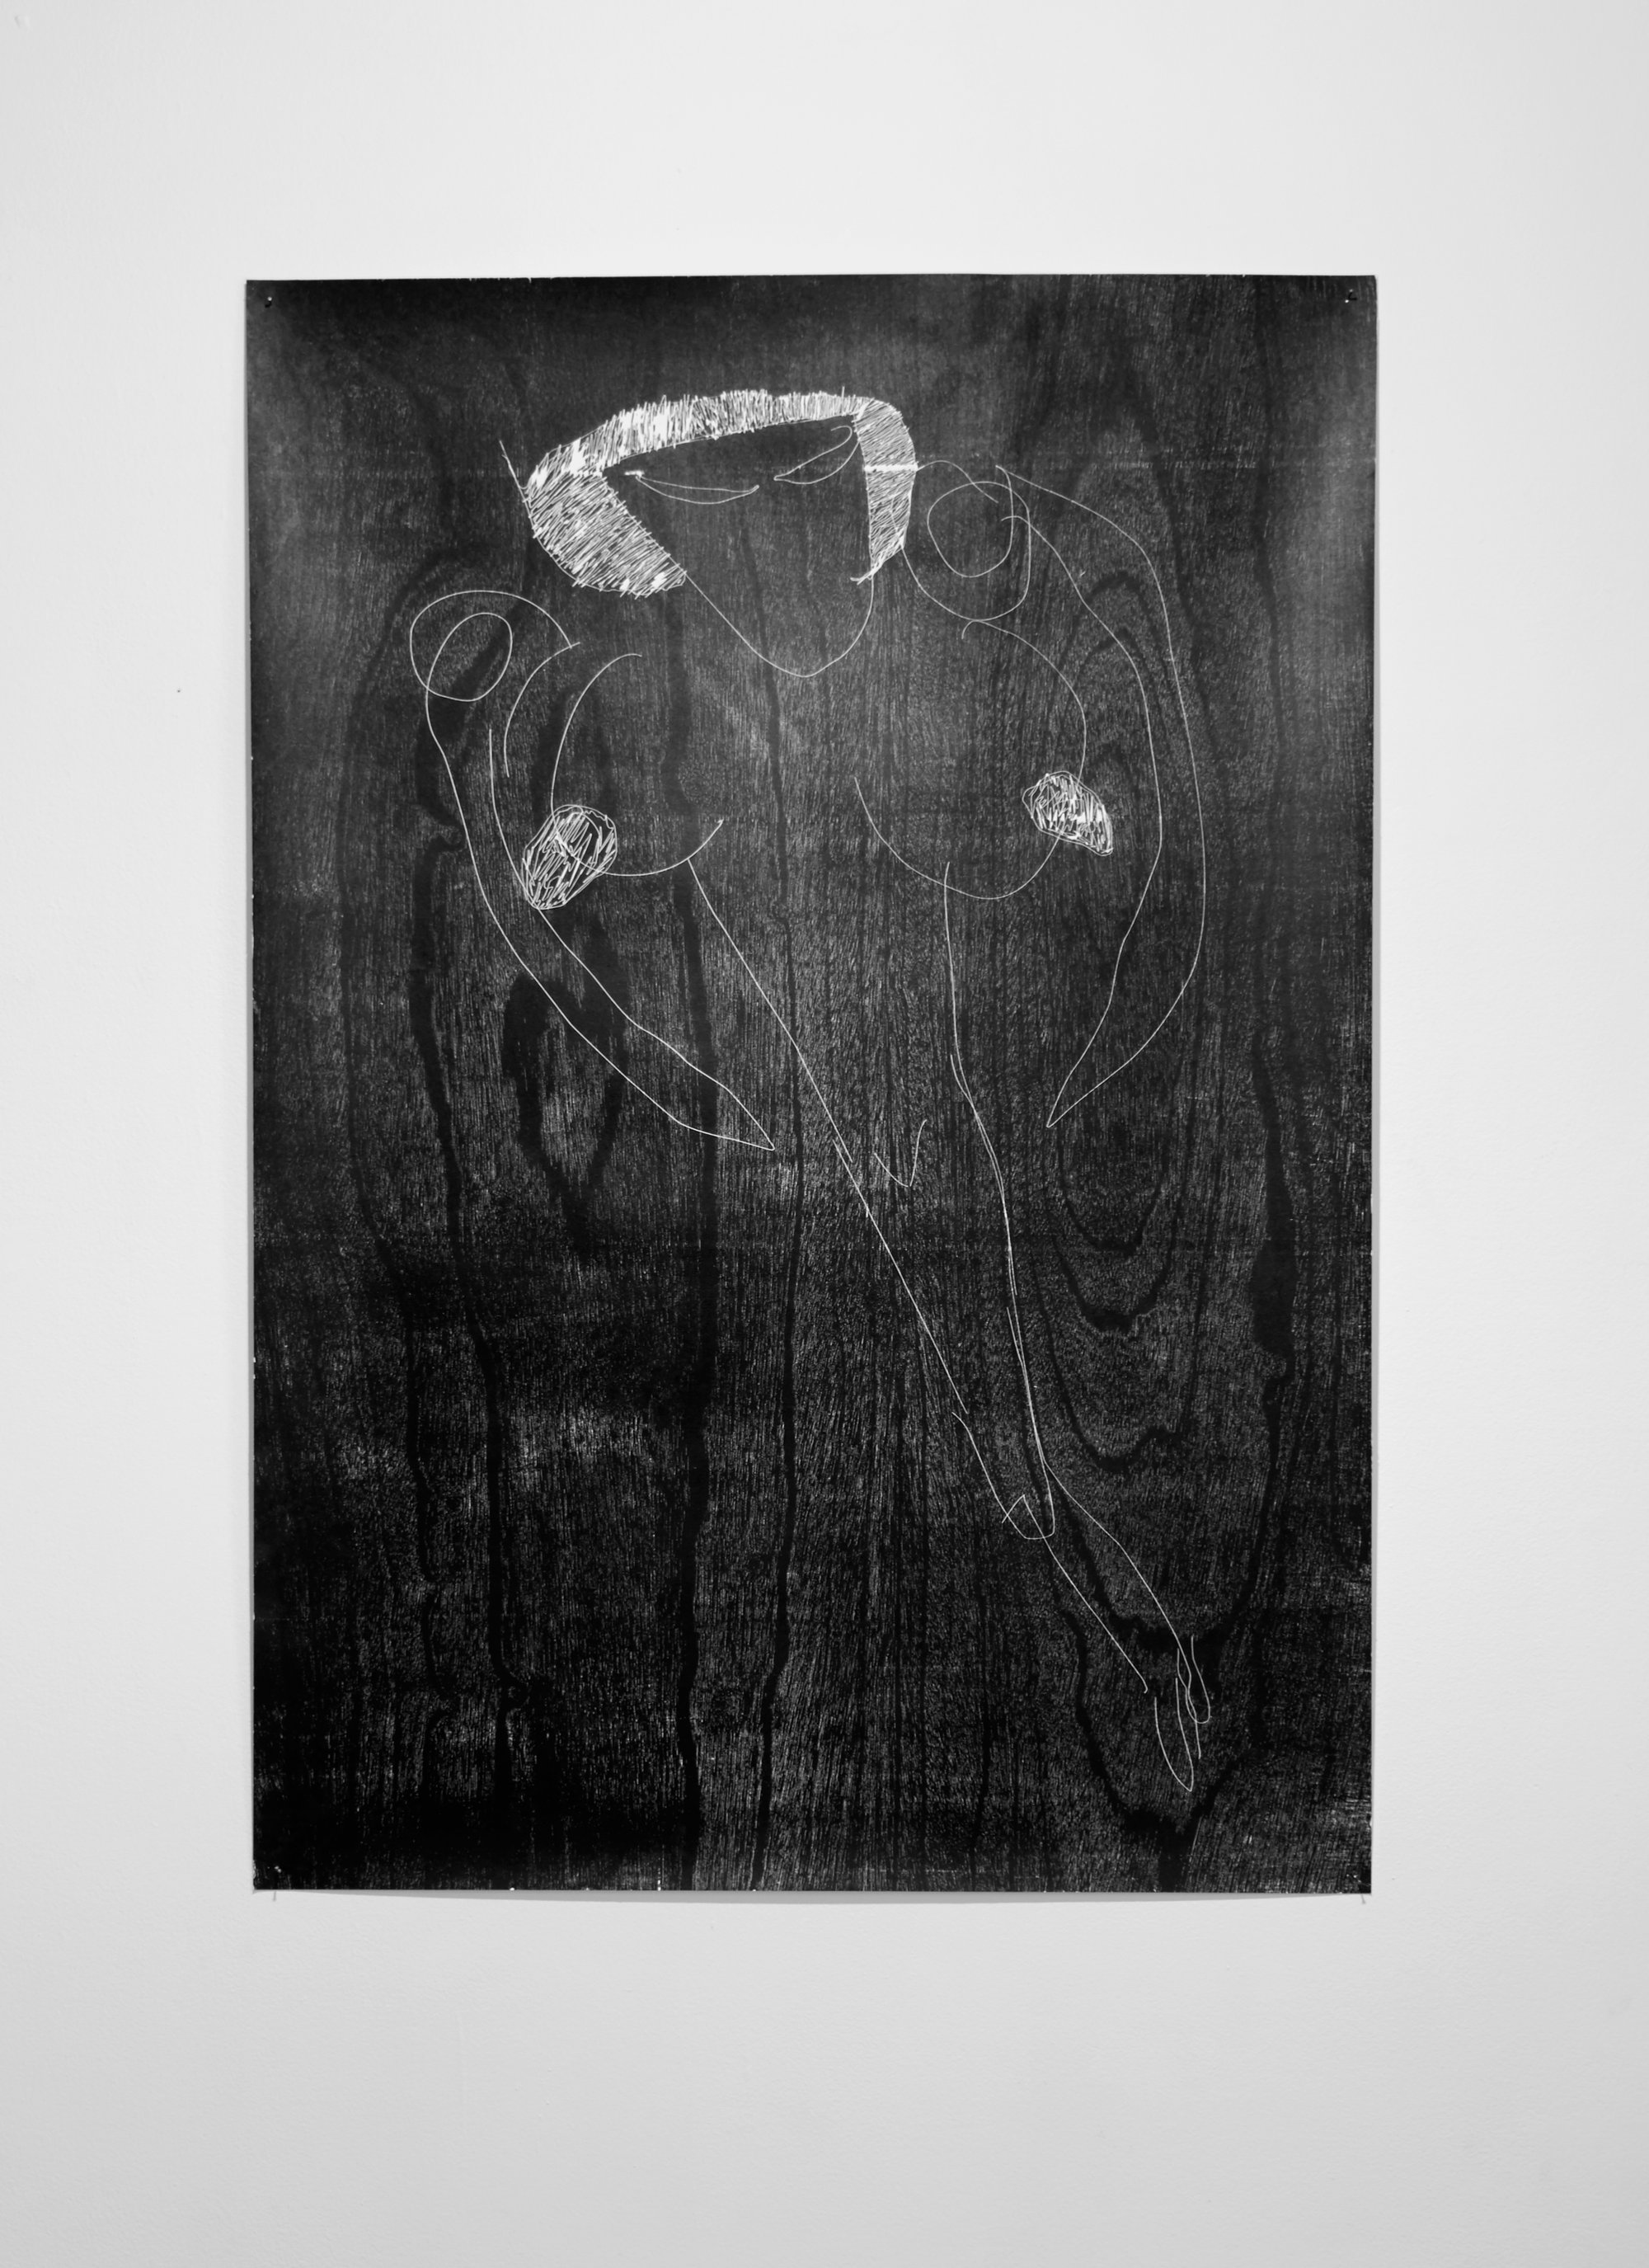 Sidsel Meineche Hansen, Bad feminist anti-hero, laser woodcut on paper, mounted on aluminium under museum glass, 135.3 x 79.8 cm (53 1/4 x 31 3/8 in), 2016